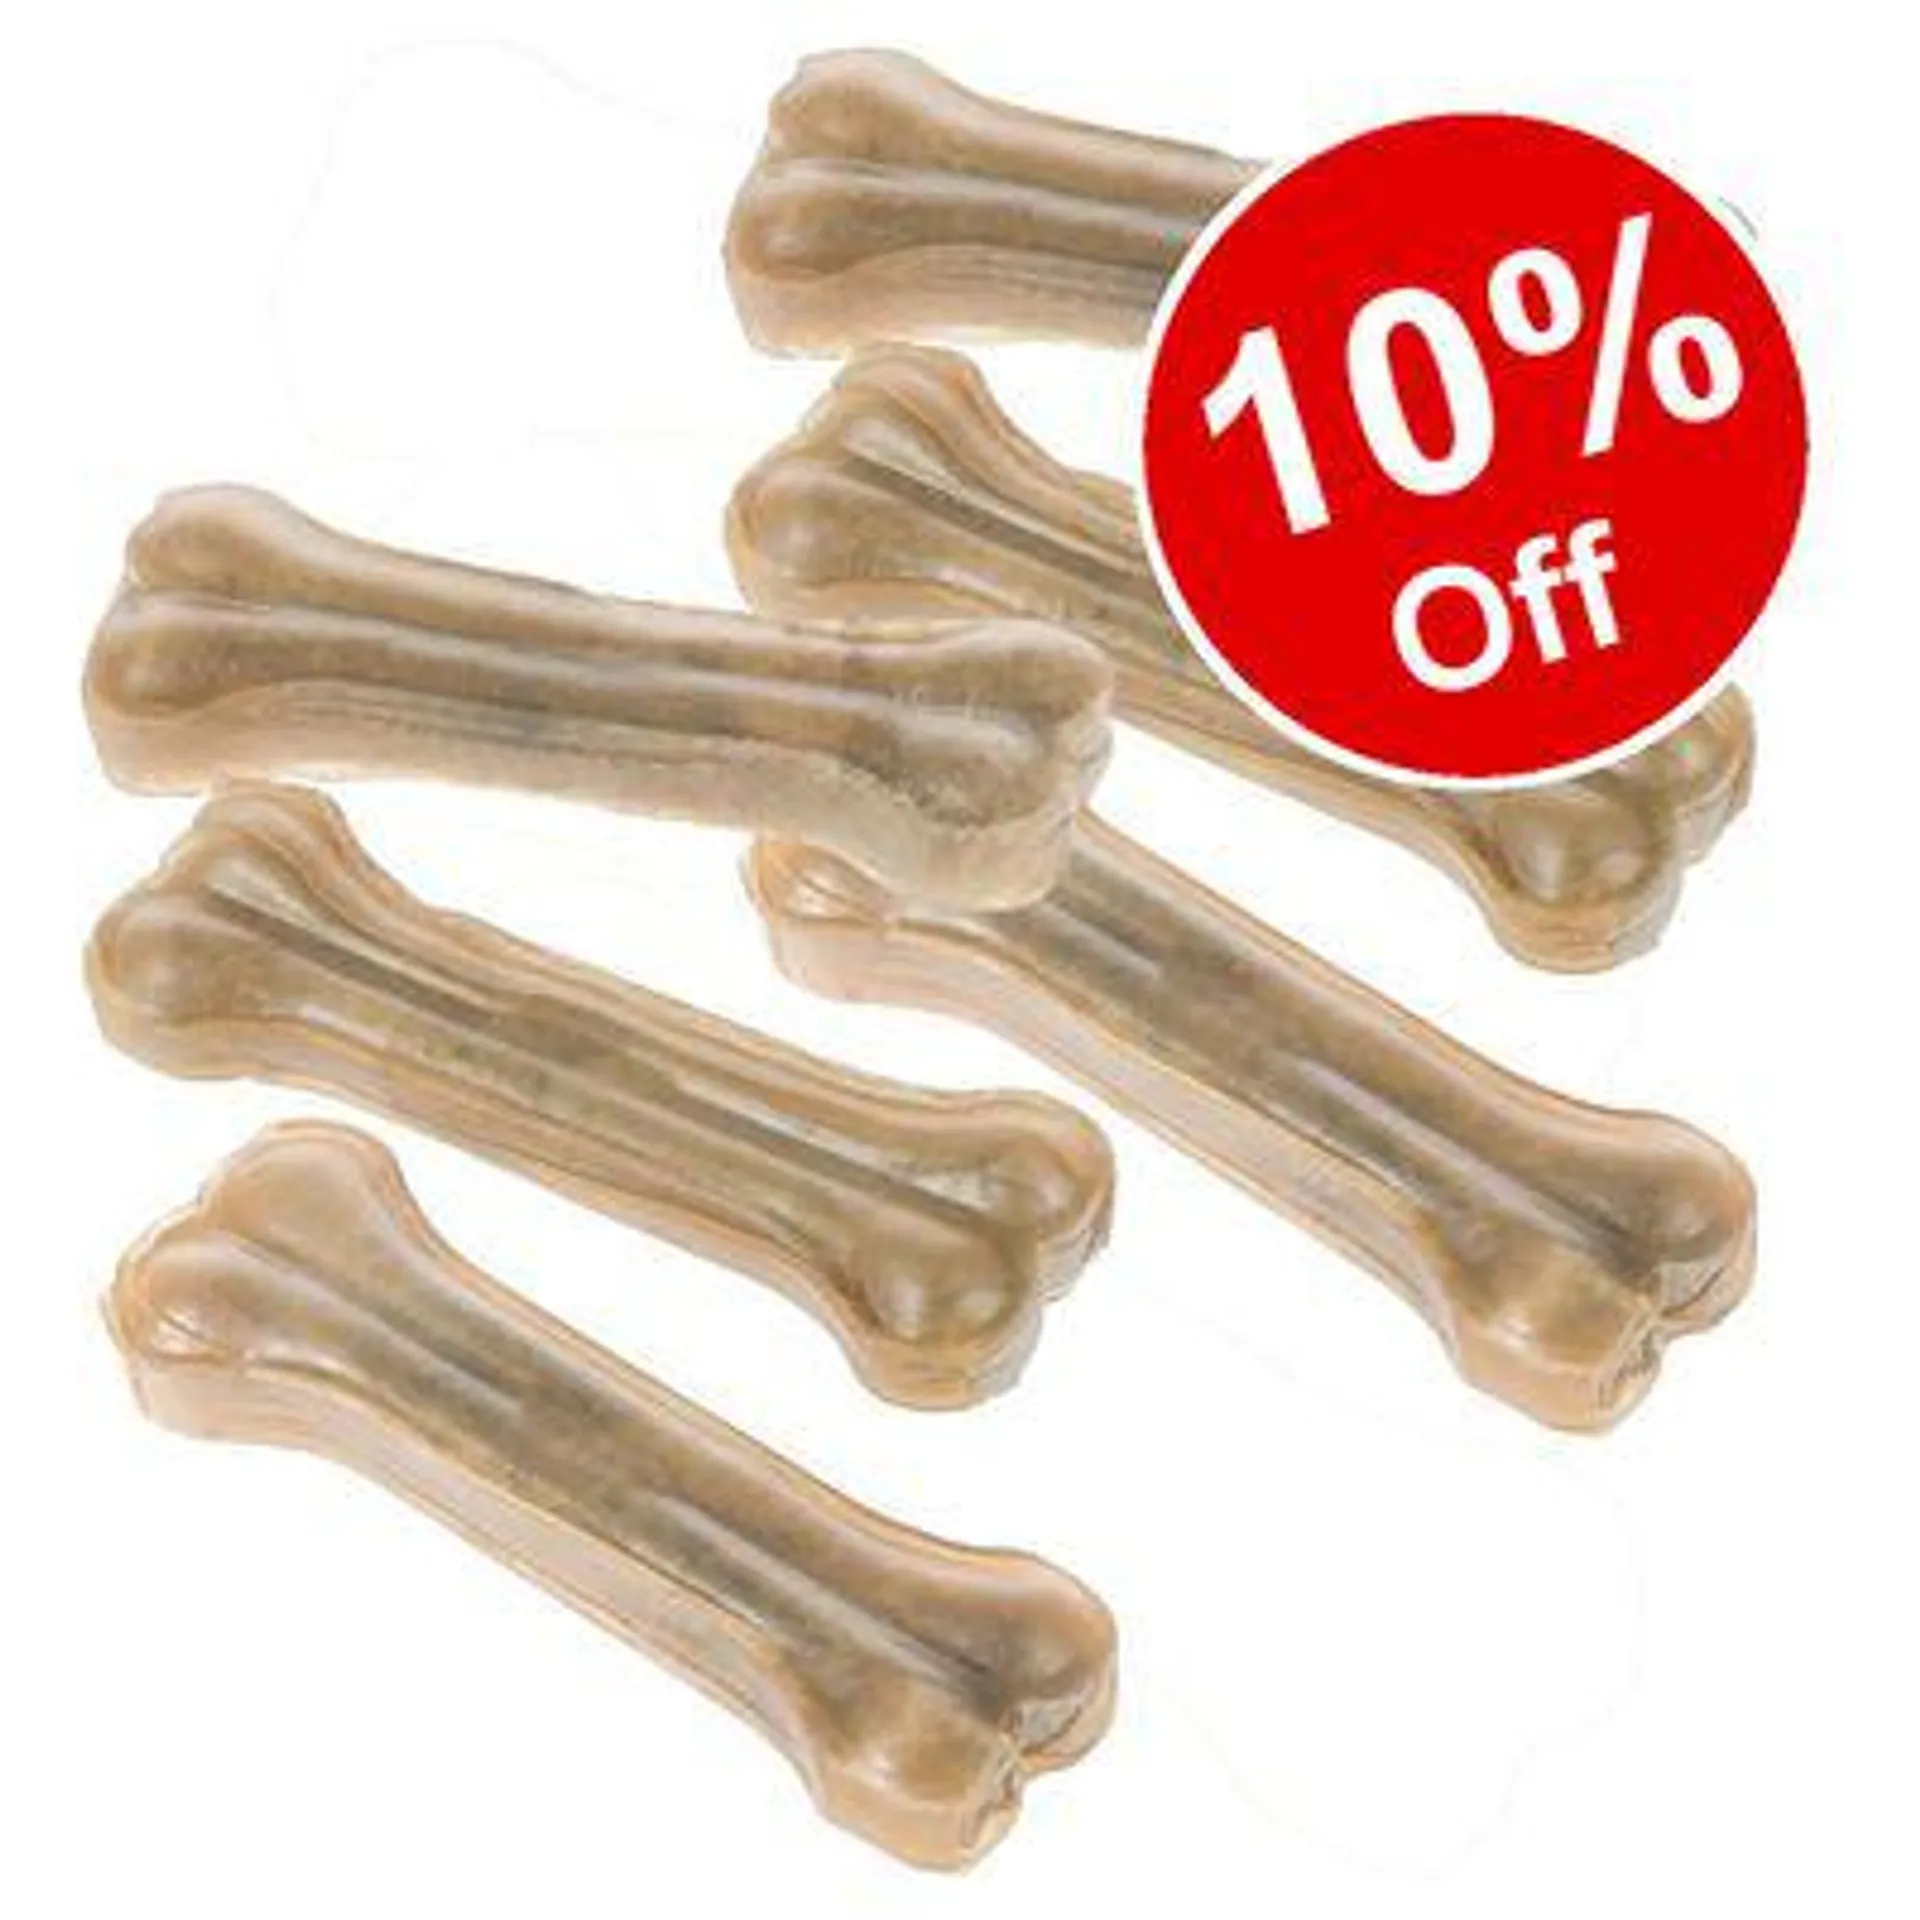 Barkoo Pressed Bones Dog Treats - 10% Off!*